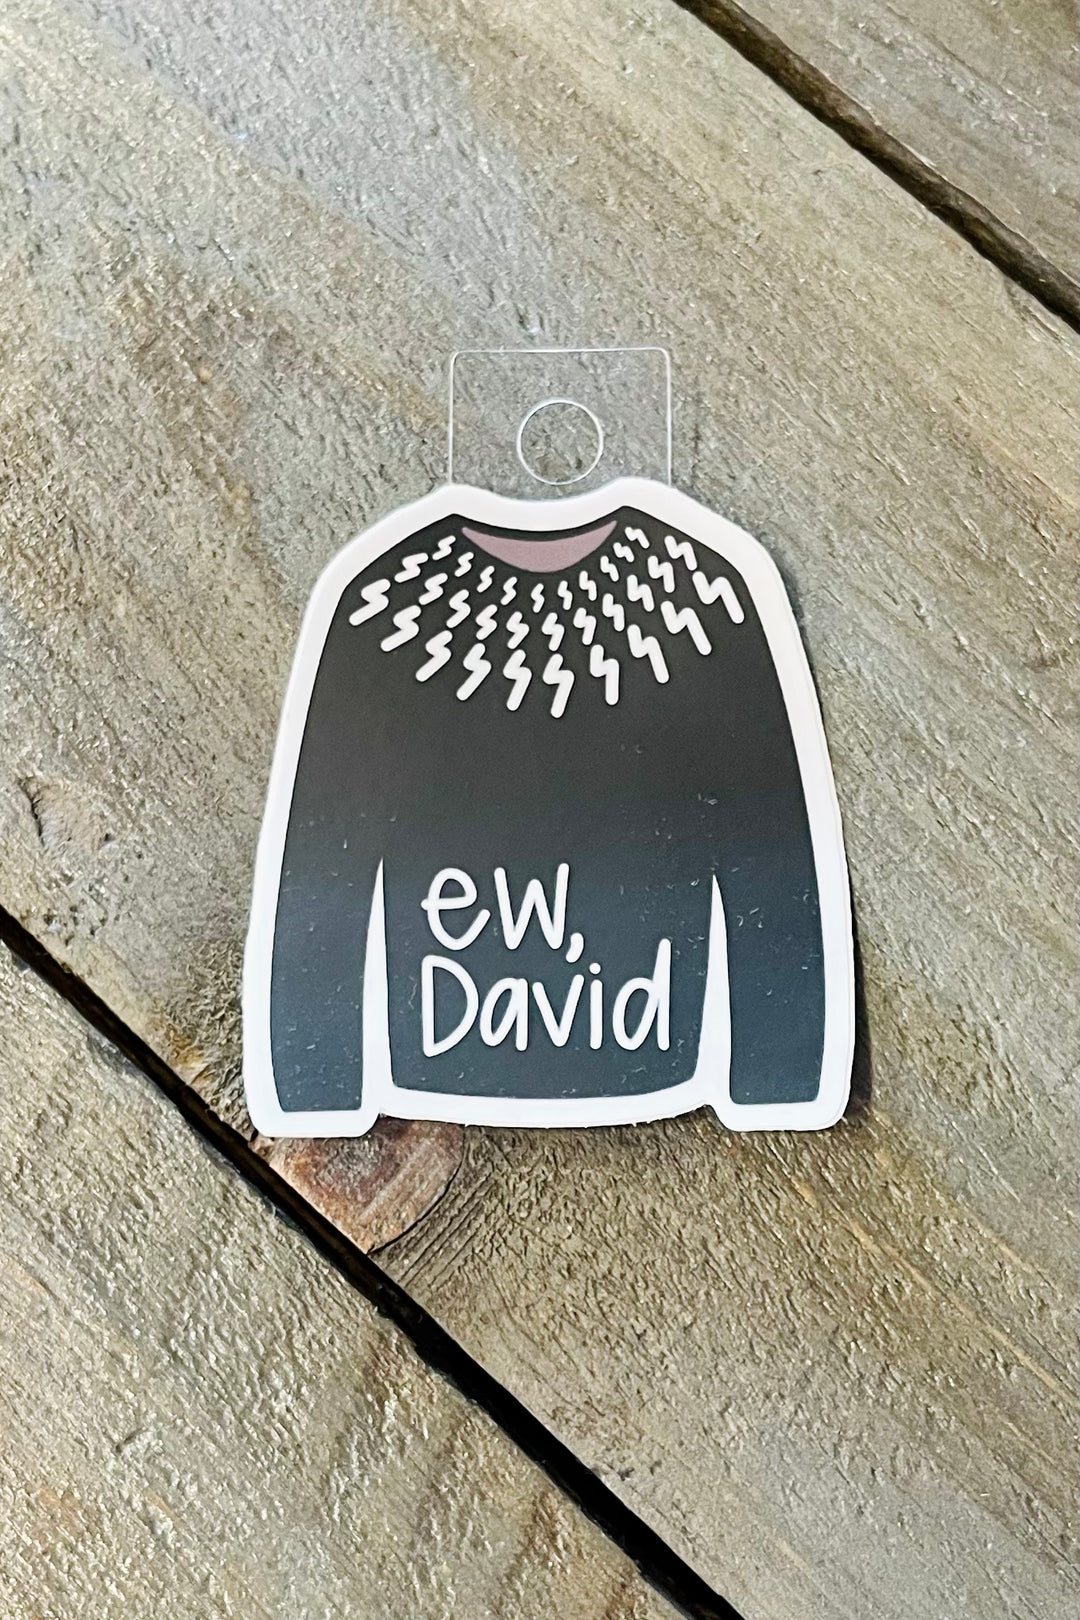 Ew, David Sweater Sticker